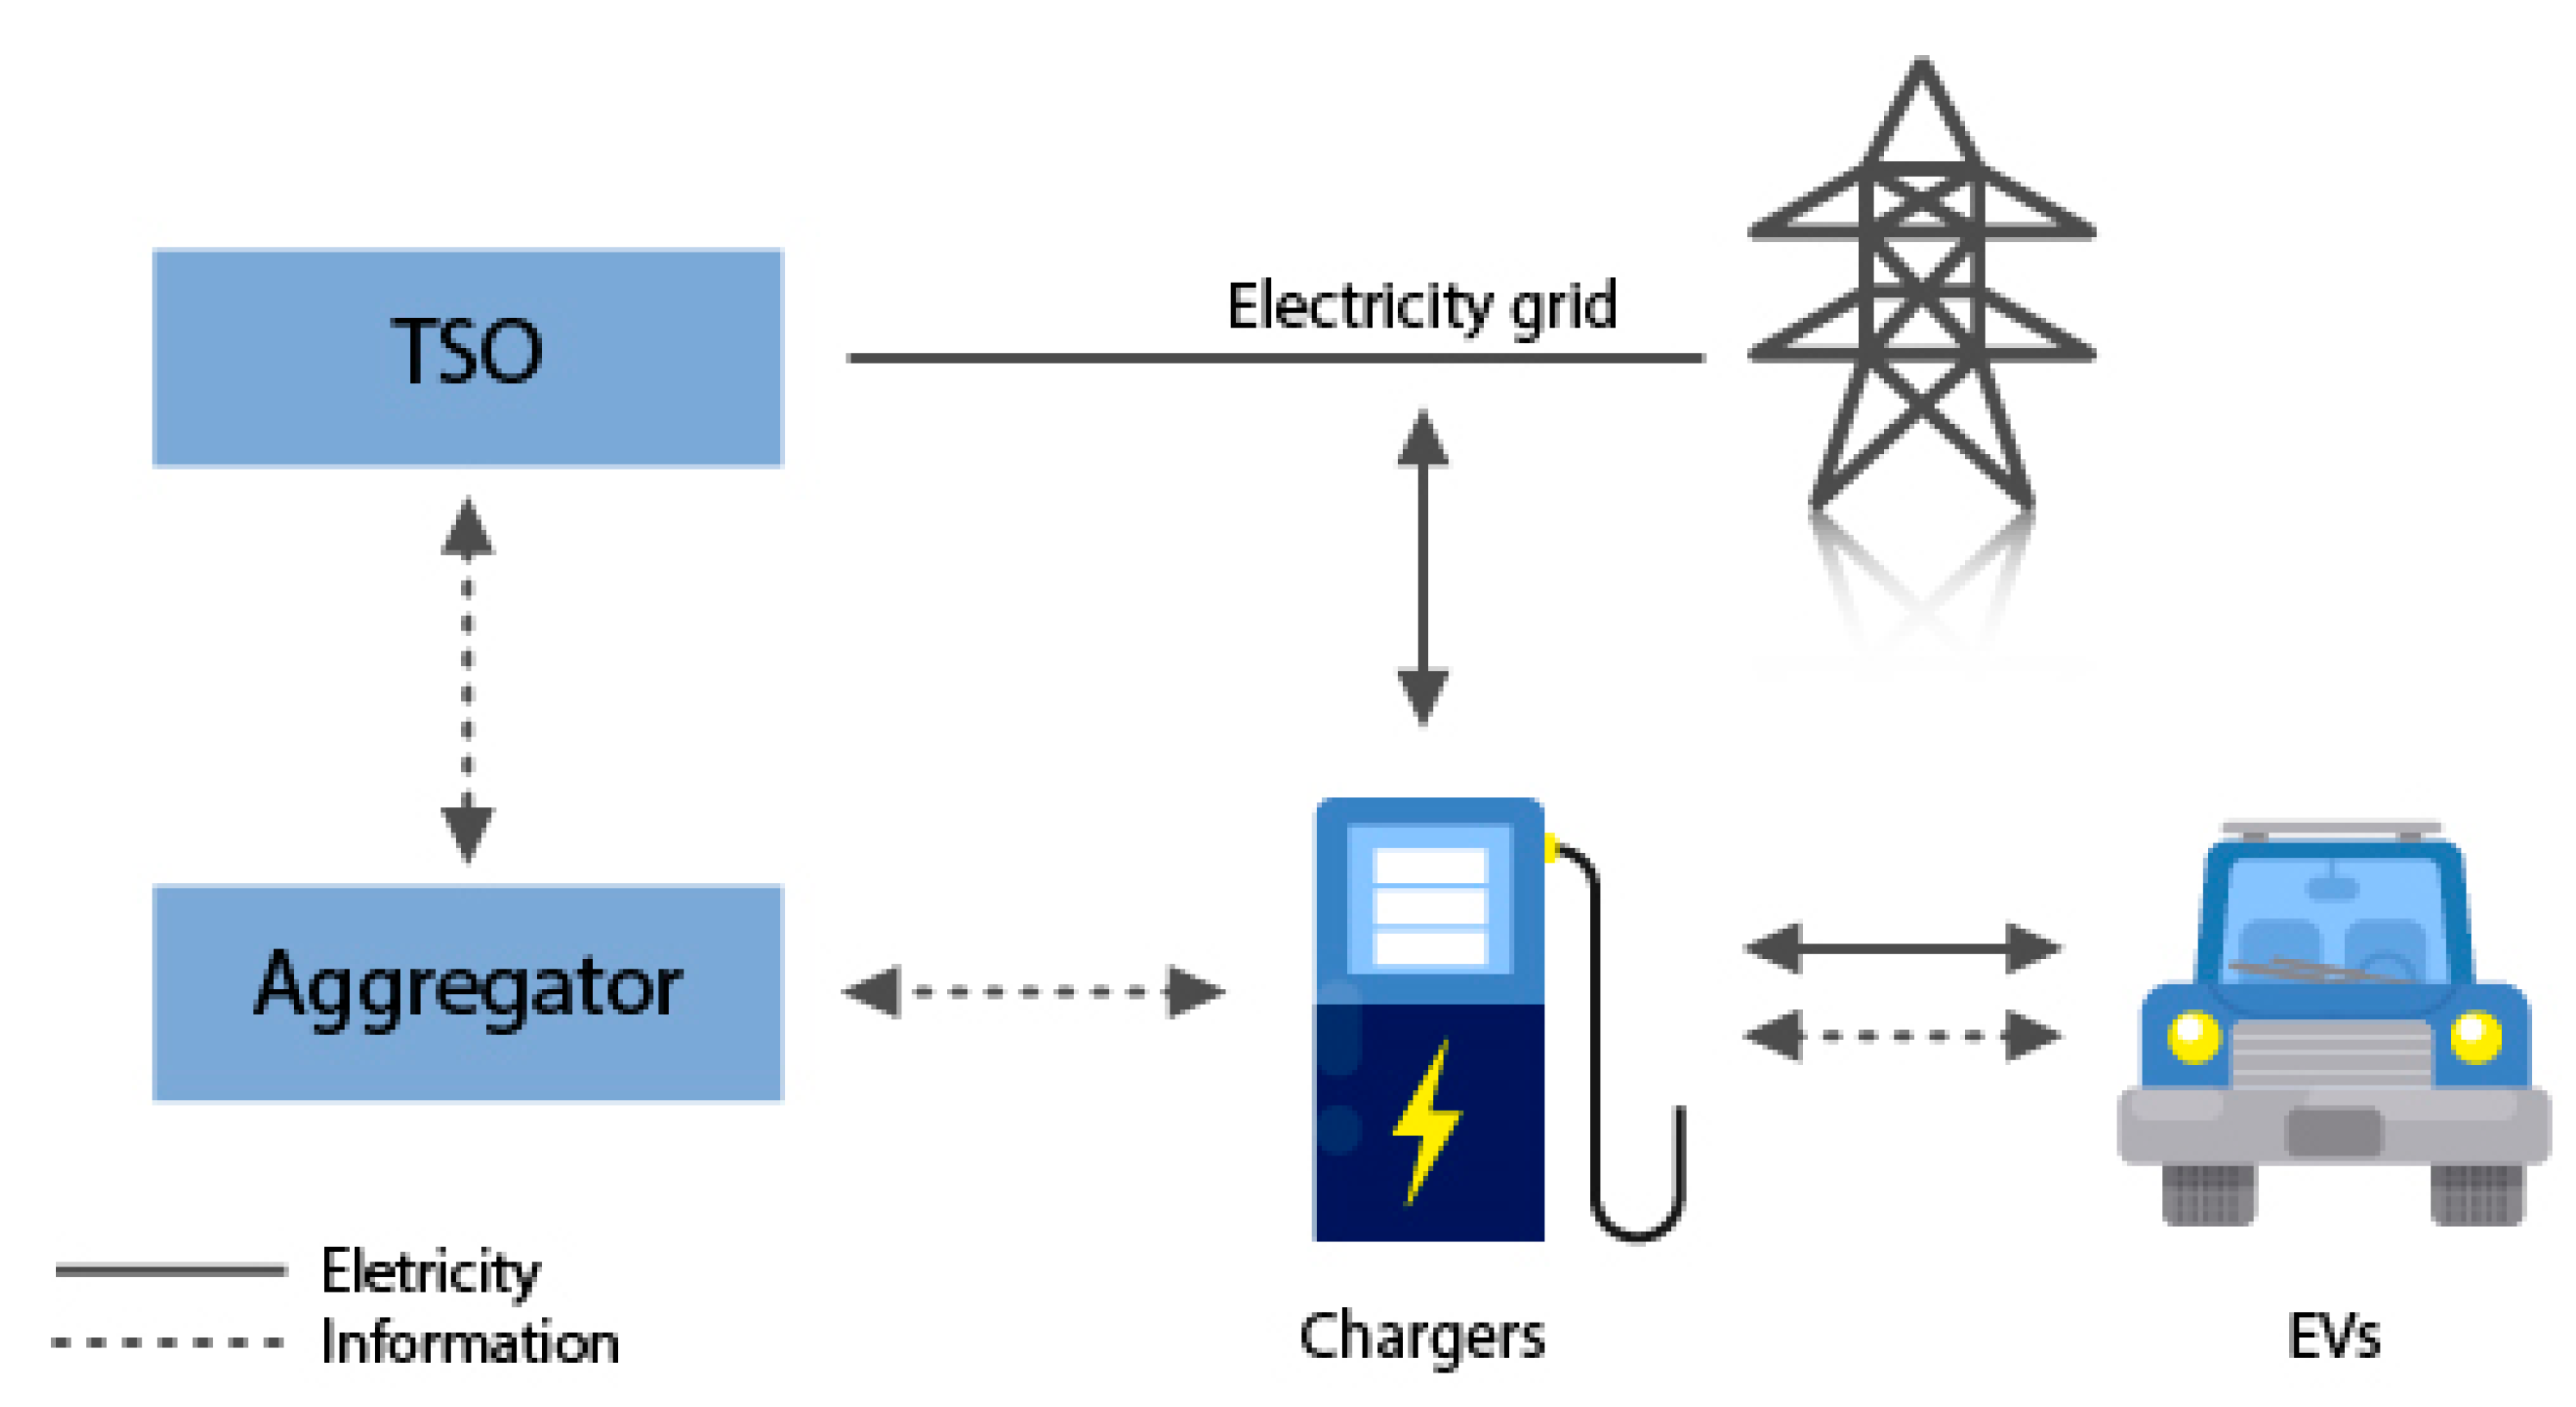 EV Powertrain – EVsys Integration costruire mobilità elettrica – CustoM 2.0